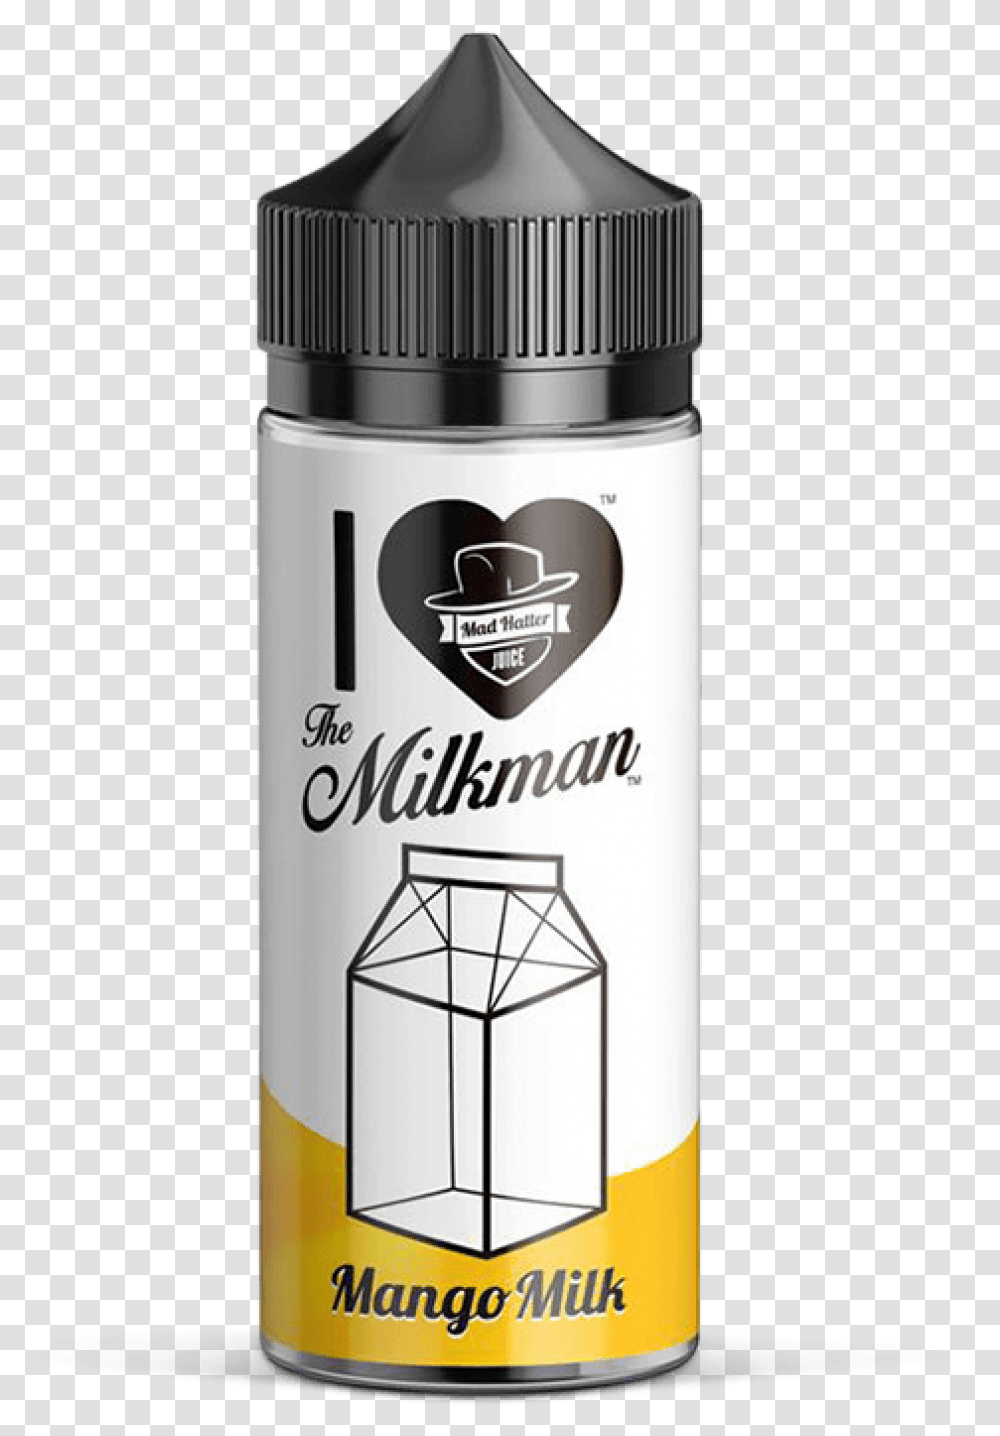 I Love The Milkman Mango Milk Love The Milkman Mango Milk, Shaker, Bottle, Tin, Can Transparent Png